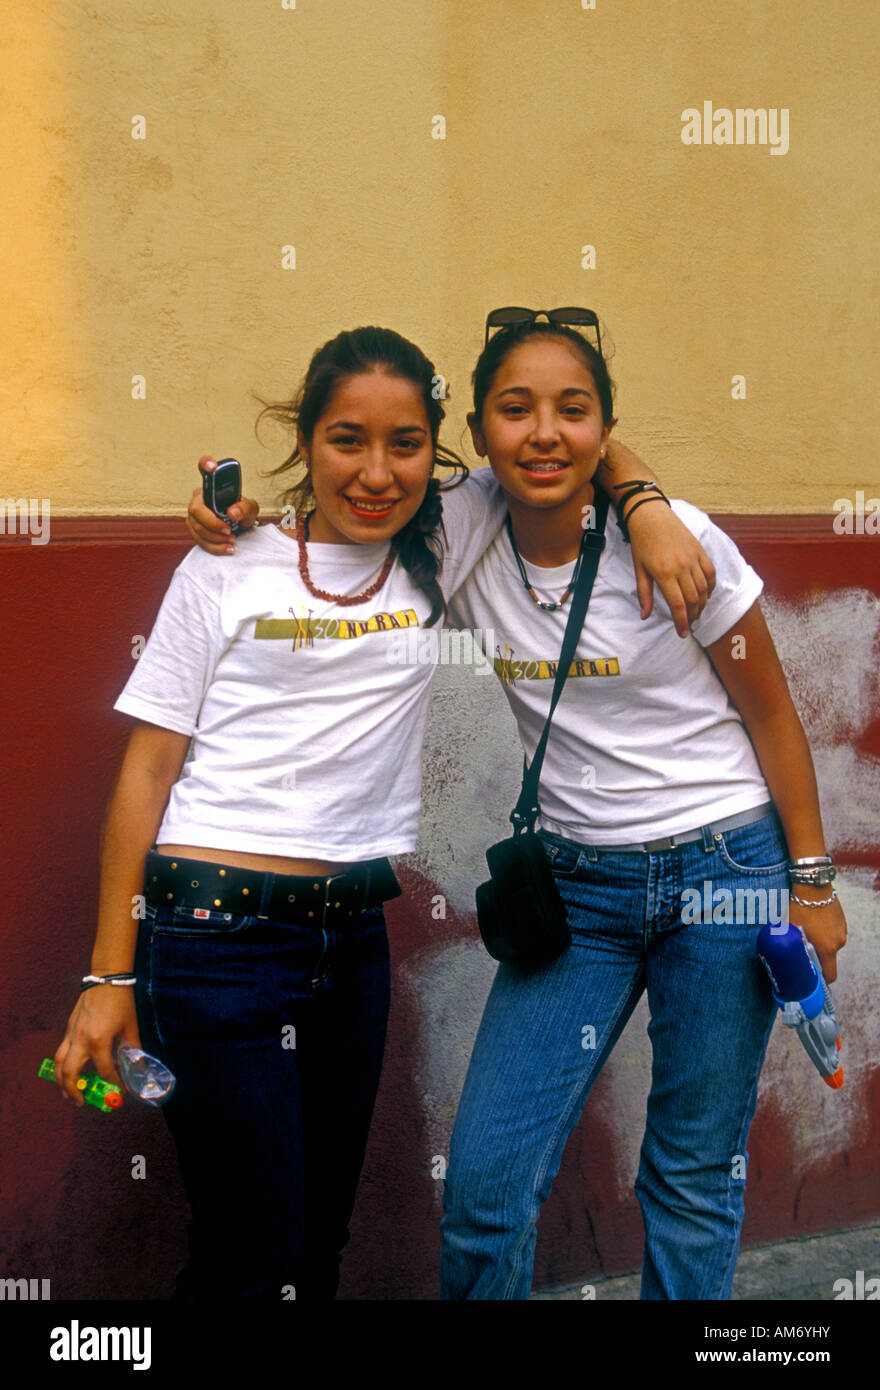 2 Mexican girls, two Mexican girls, Mexicans, Mexican girls, teen girls, teenage girls, teenagers, Oaxaca, Oaxaca de Juarez, Oaxaca State, Mexico Stock Photo